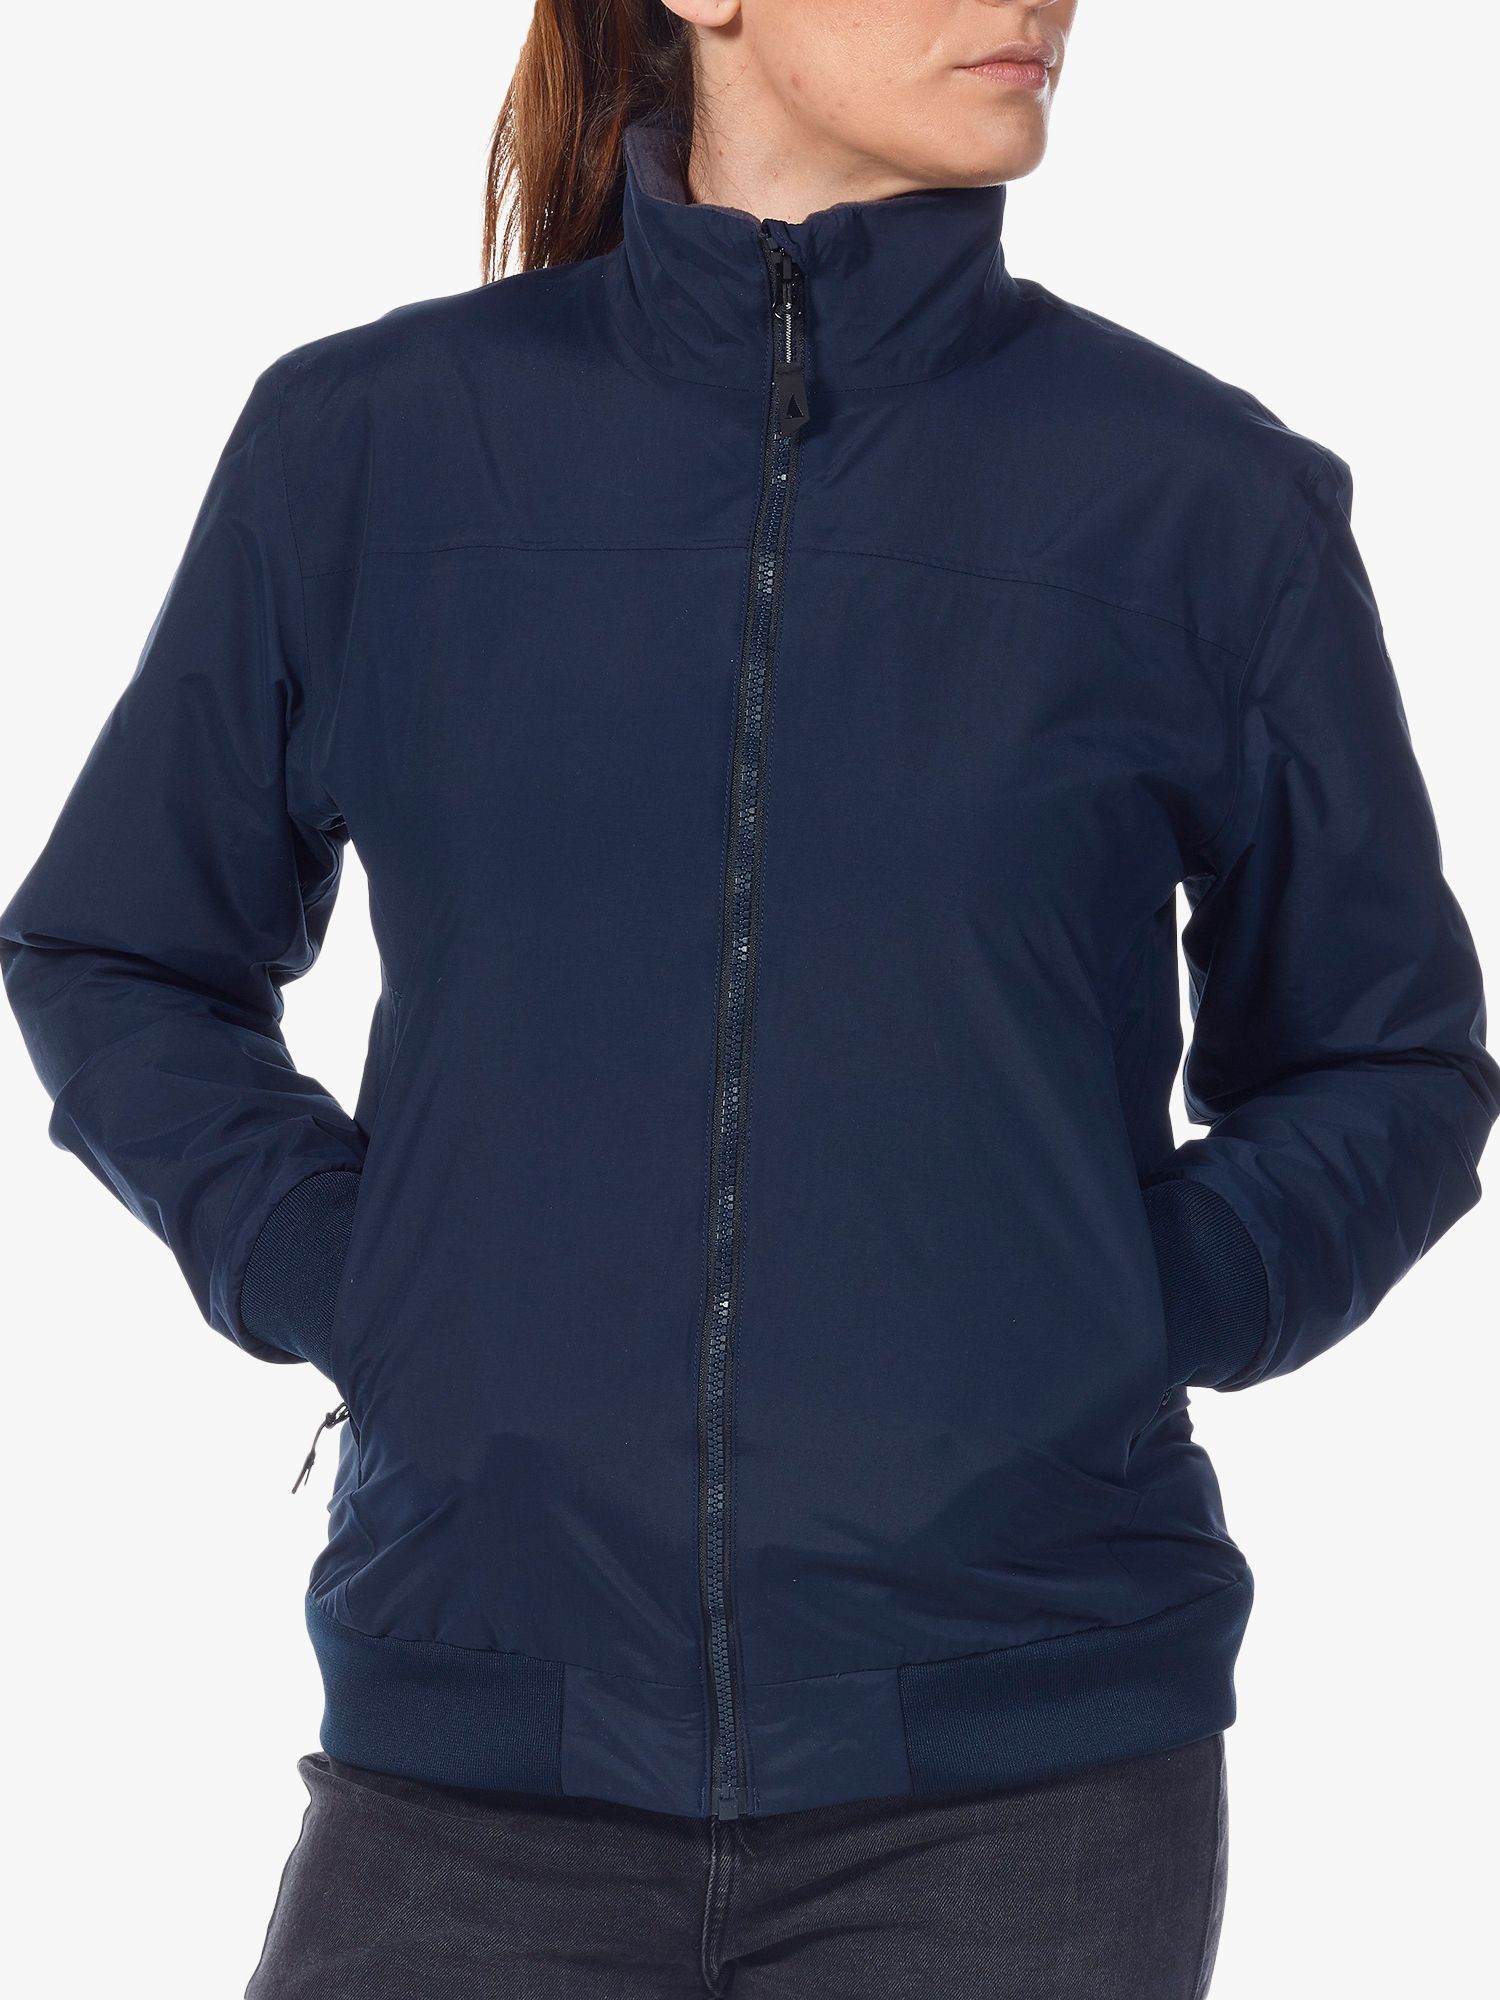 Musto Classic Snug Blouson 2.0 Women's Jacket, Navy/Carbon, 8